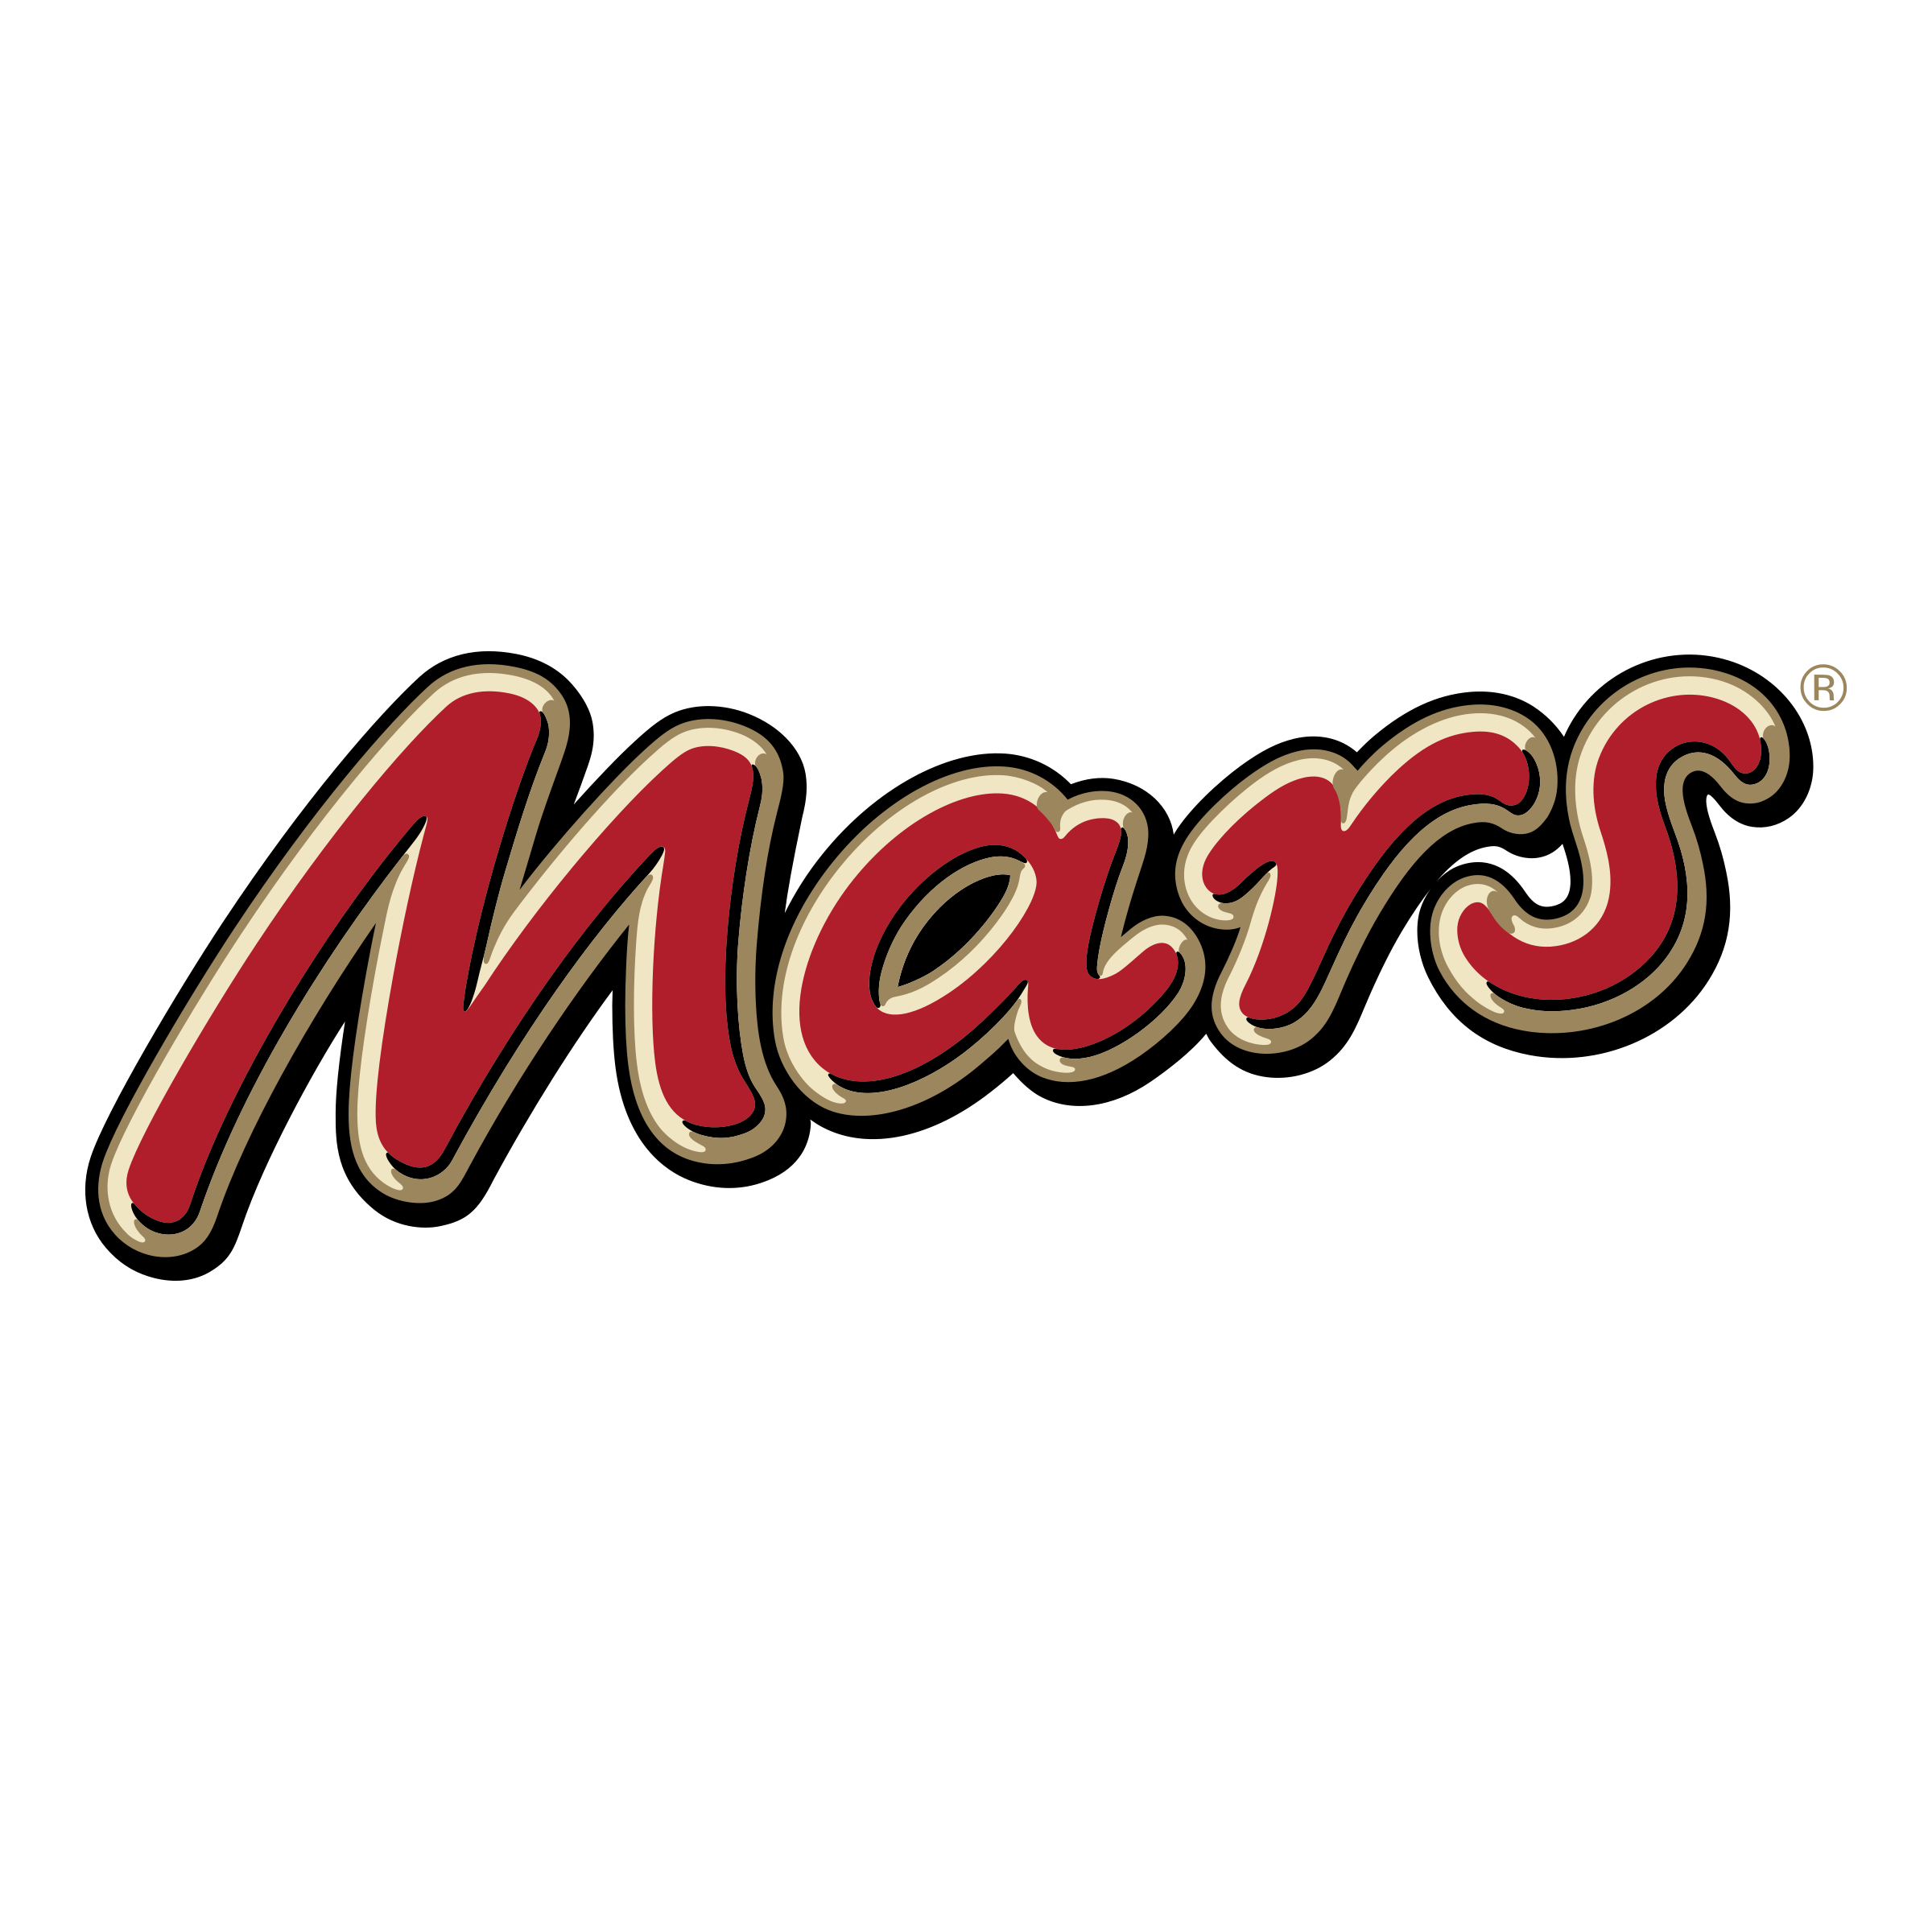 Mars Logo - Mars Logo PNG Transparent & SVG Vector - Freebie Supply